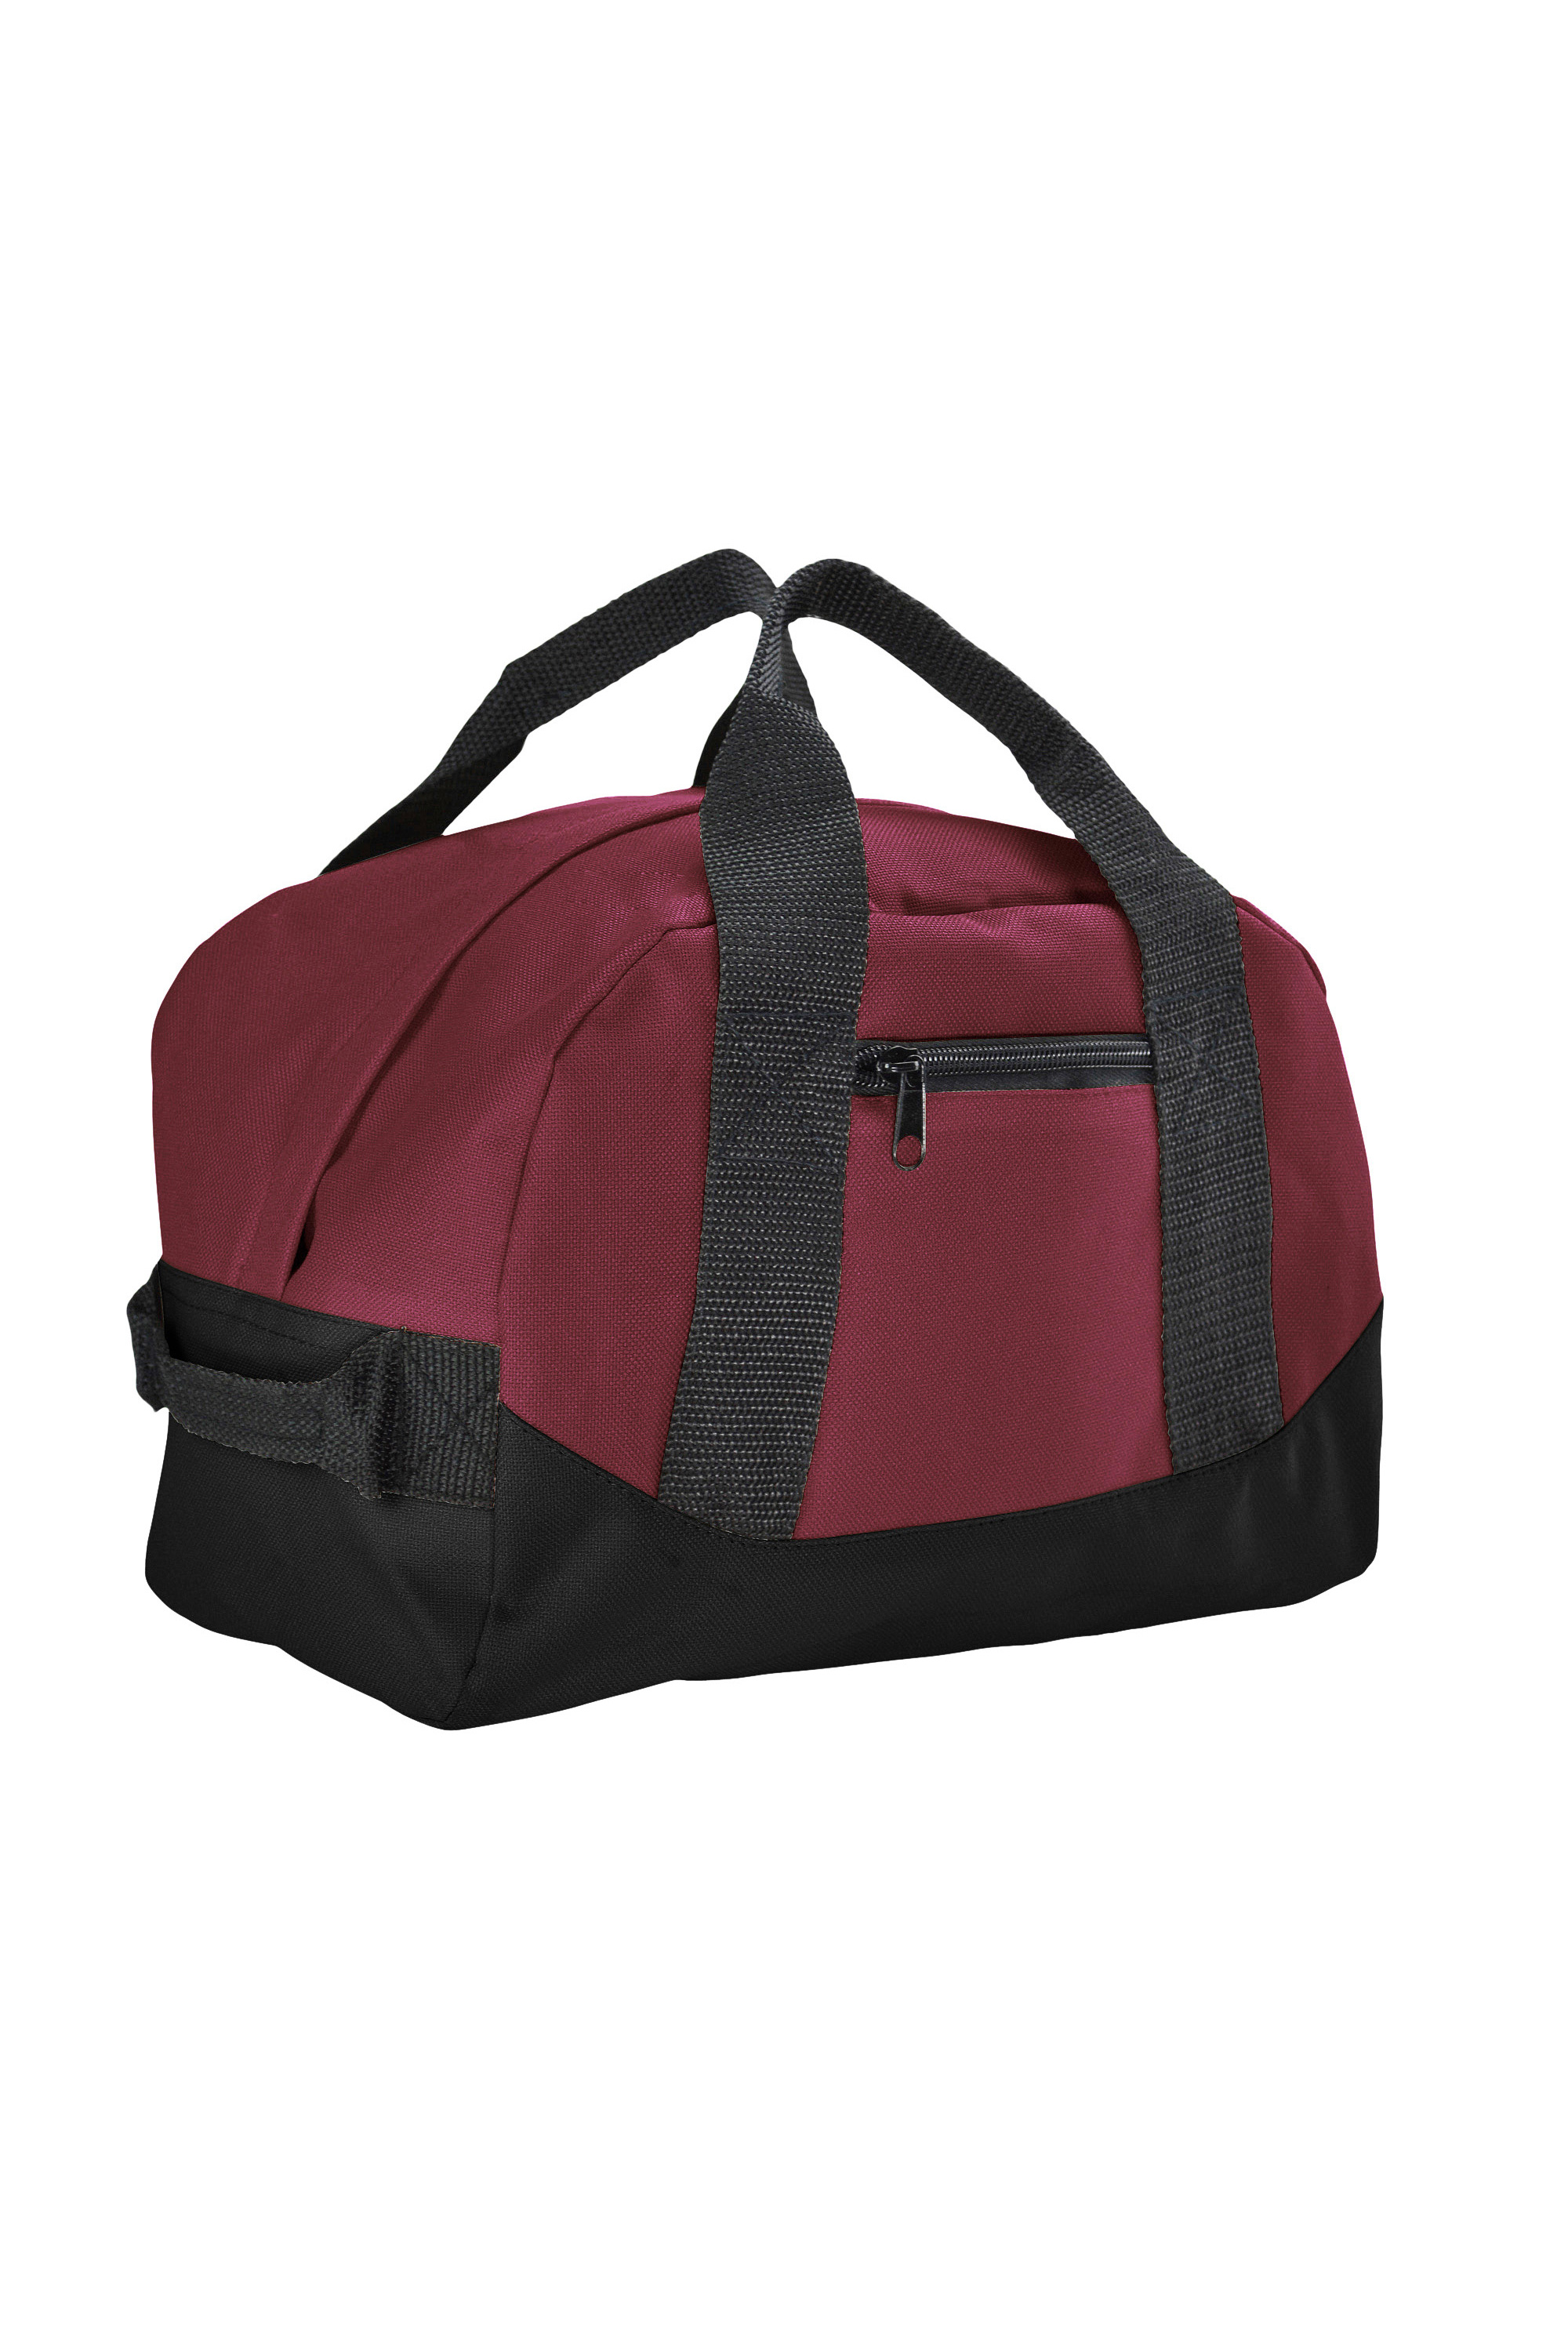 DALIX 12" Mini Duffel Bag Gym Duffle in Maroon - image 1 of 7